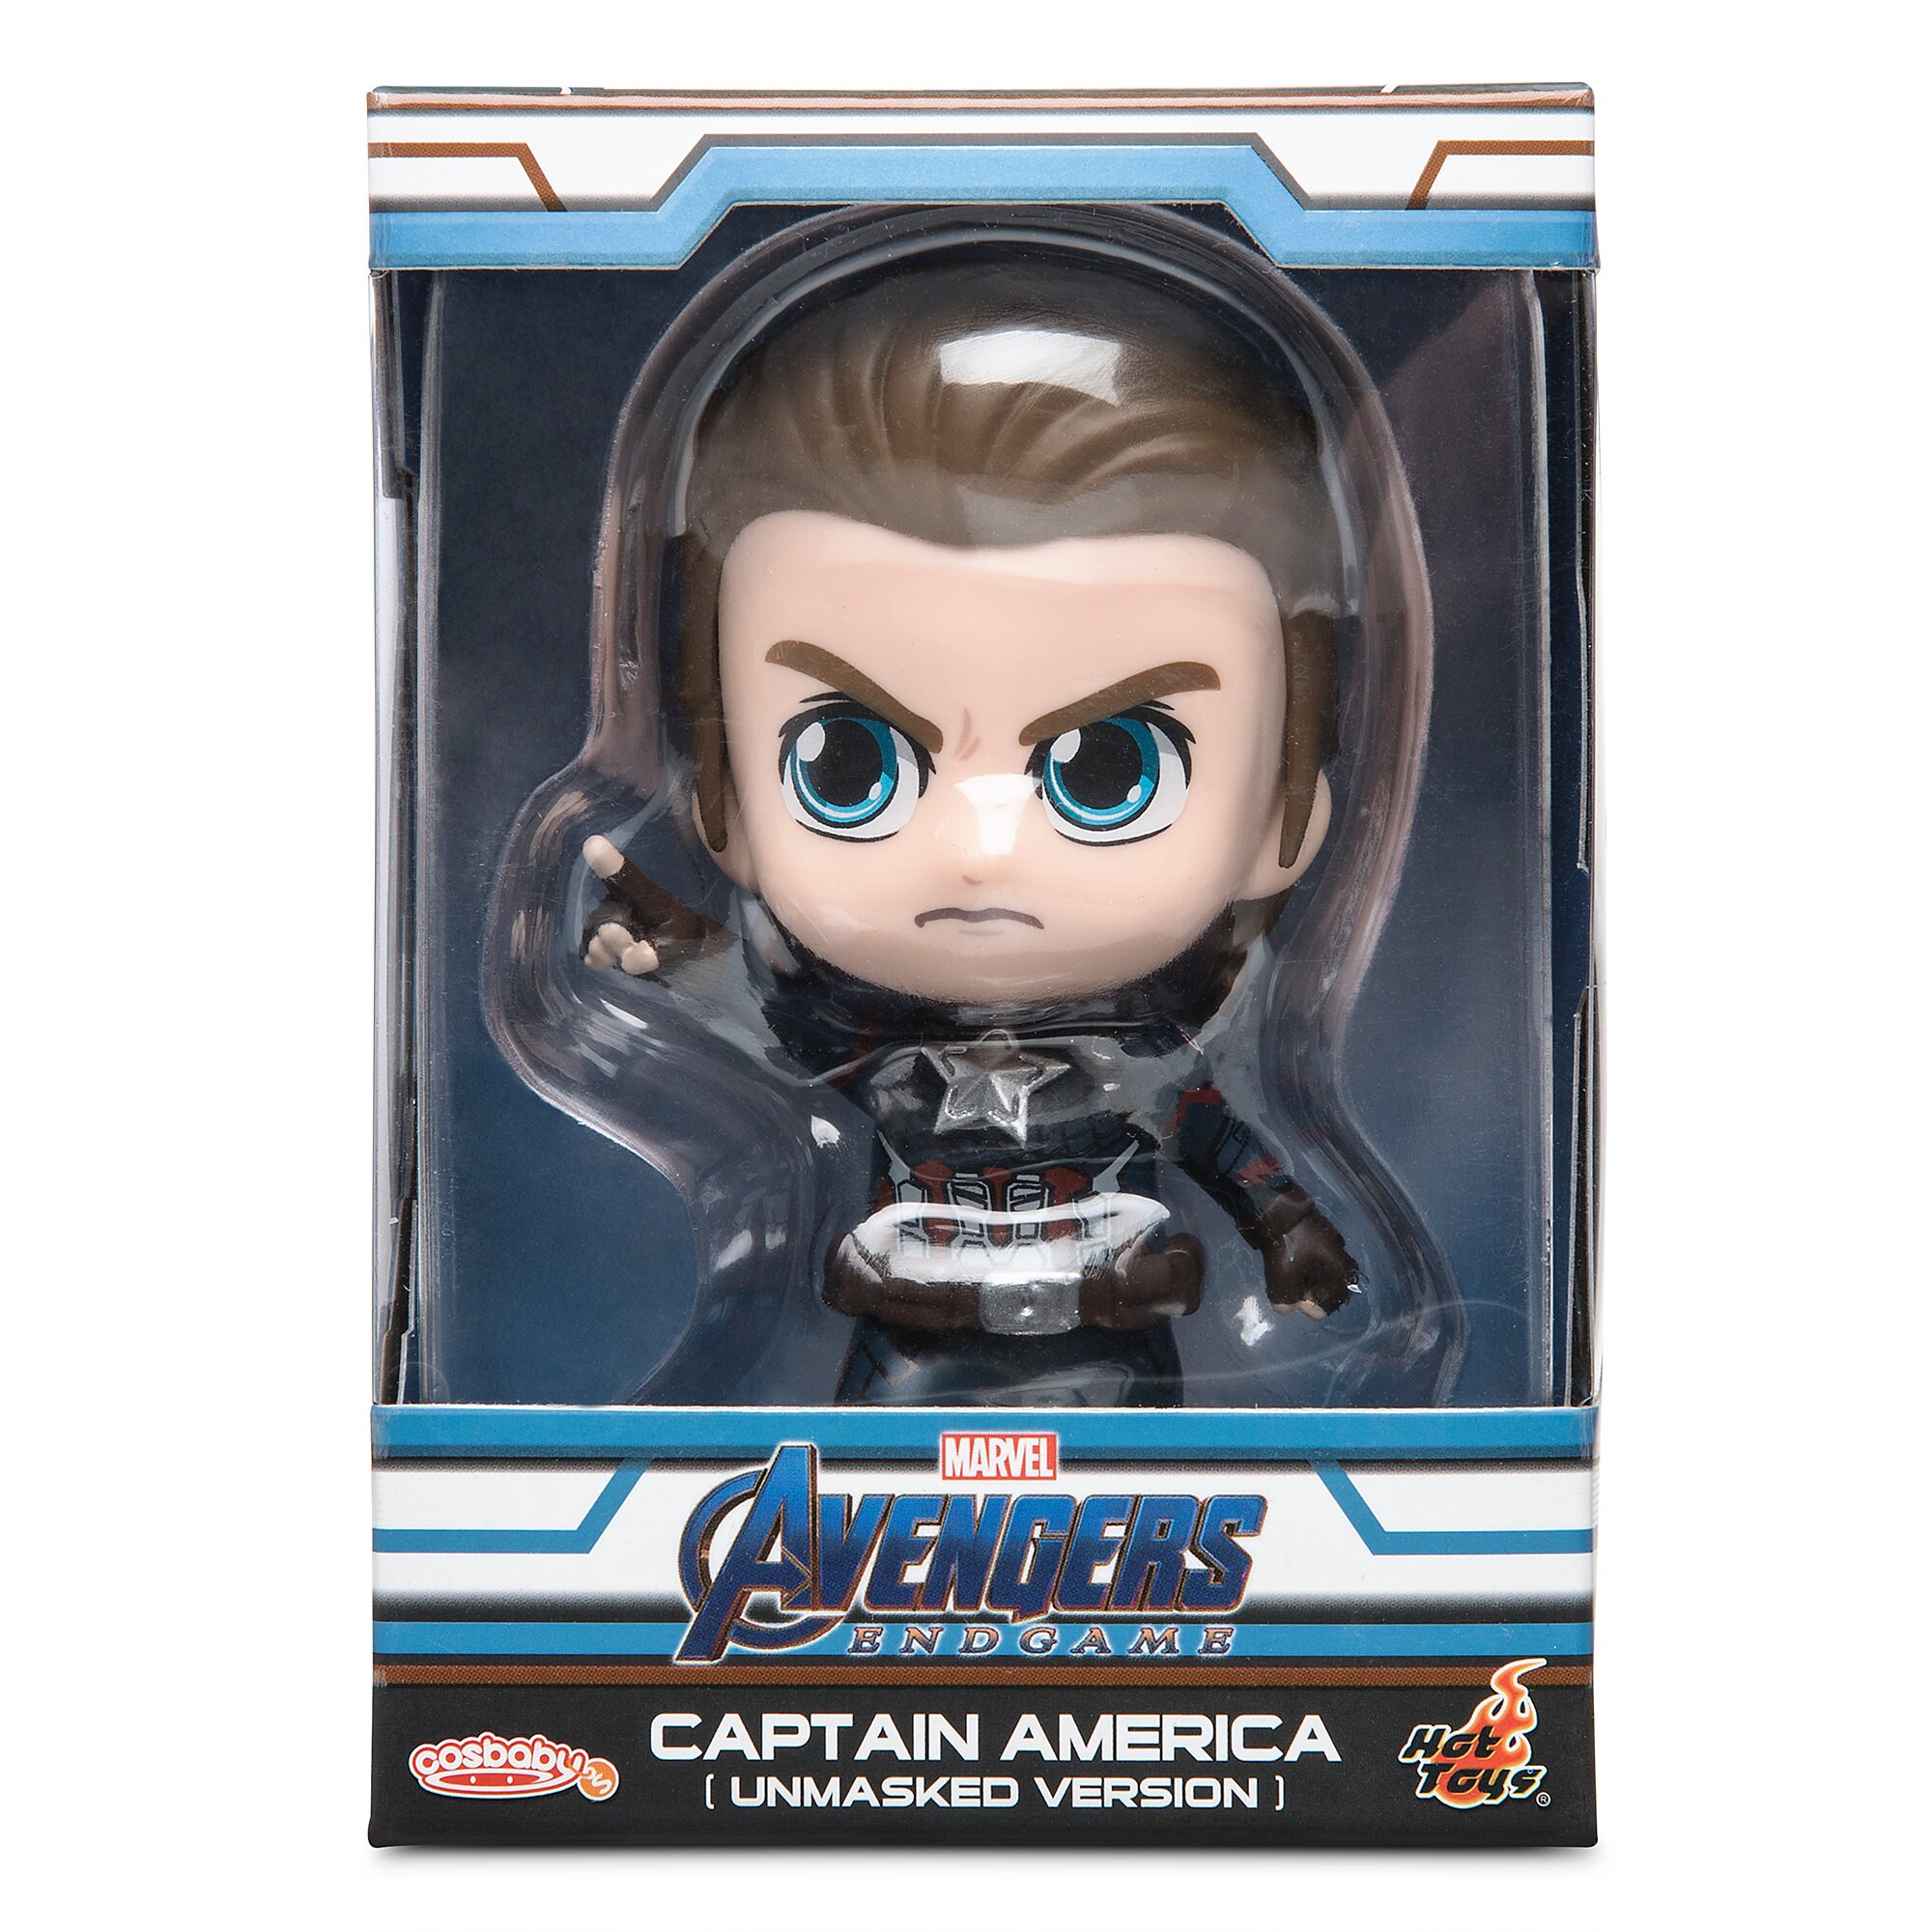 Captain America Cosbaby Bobble-Head Figure by Hot Toys - Marvel's Avengers: Endgame